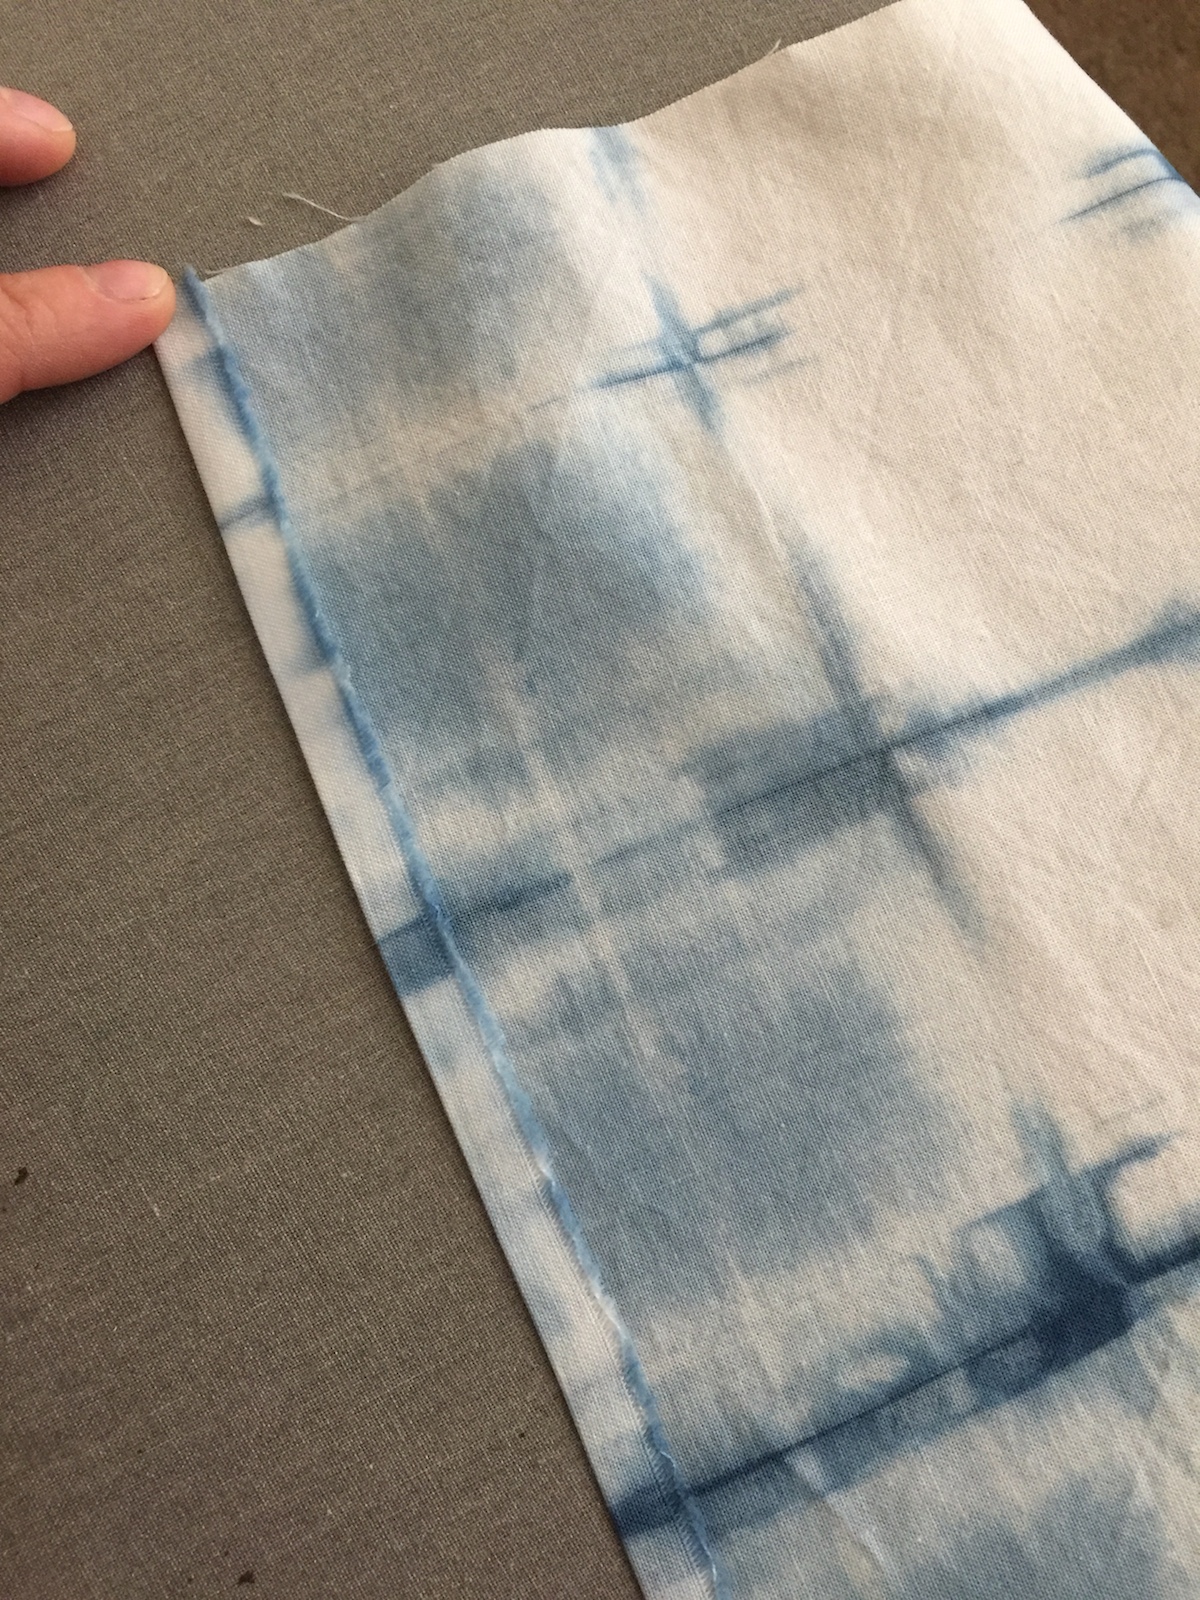 How to make Shibori Indigo Dyed Tea Towels - WeAllSew